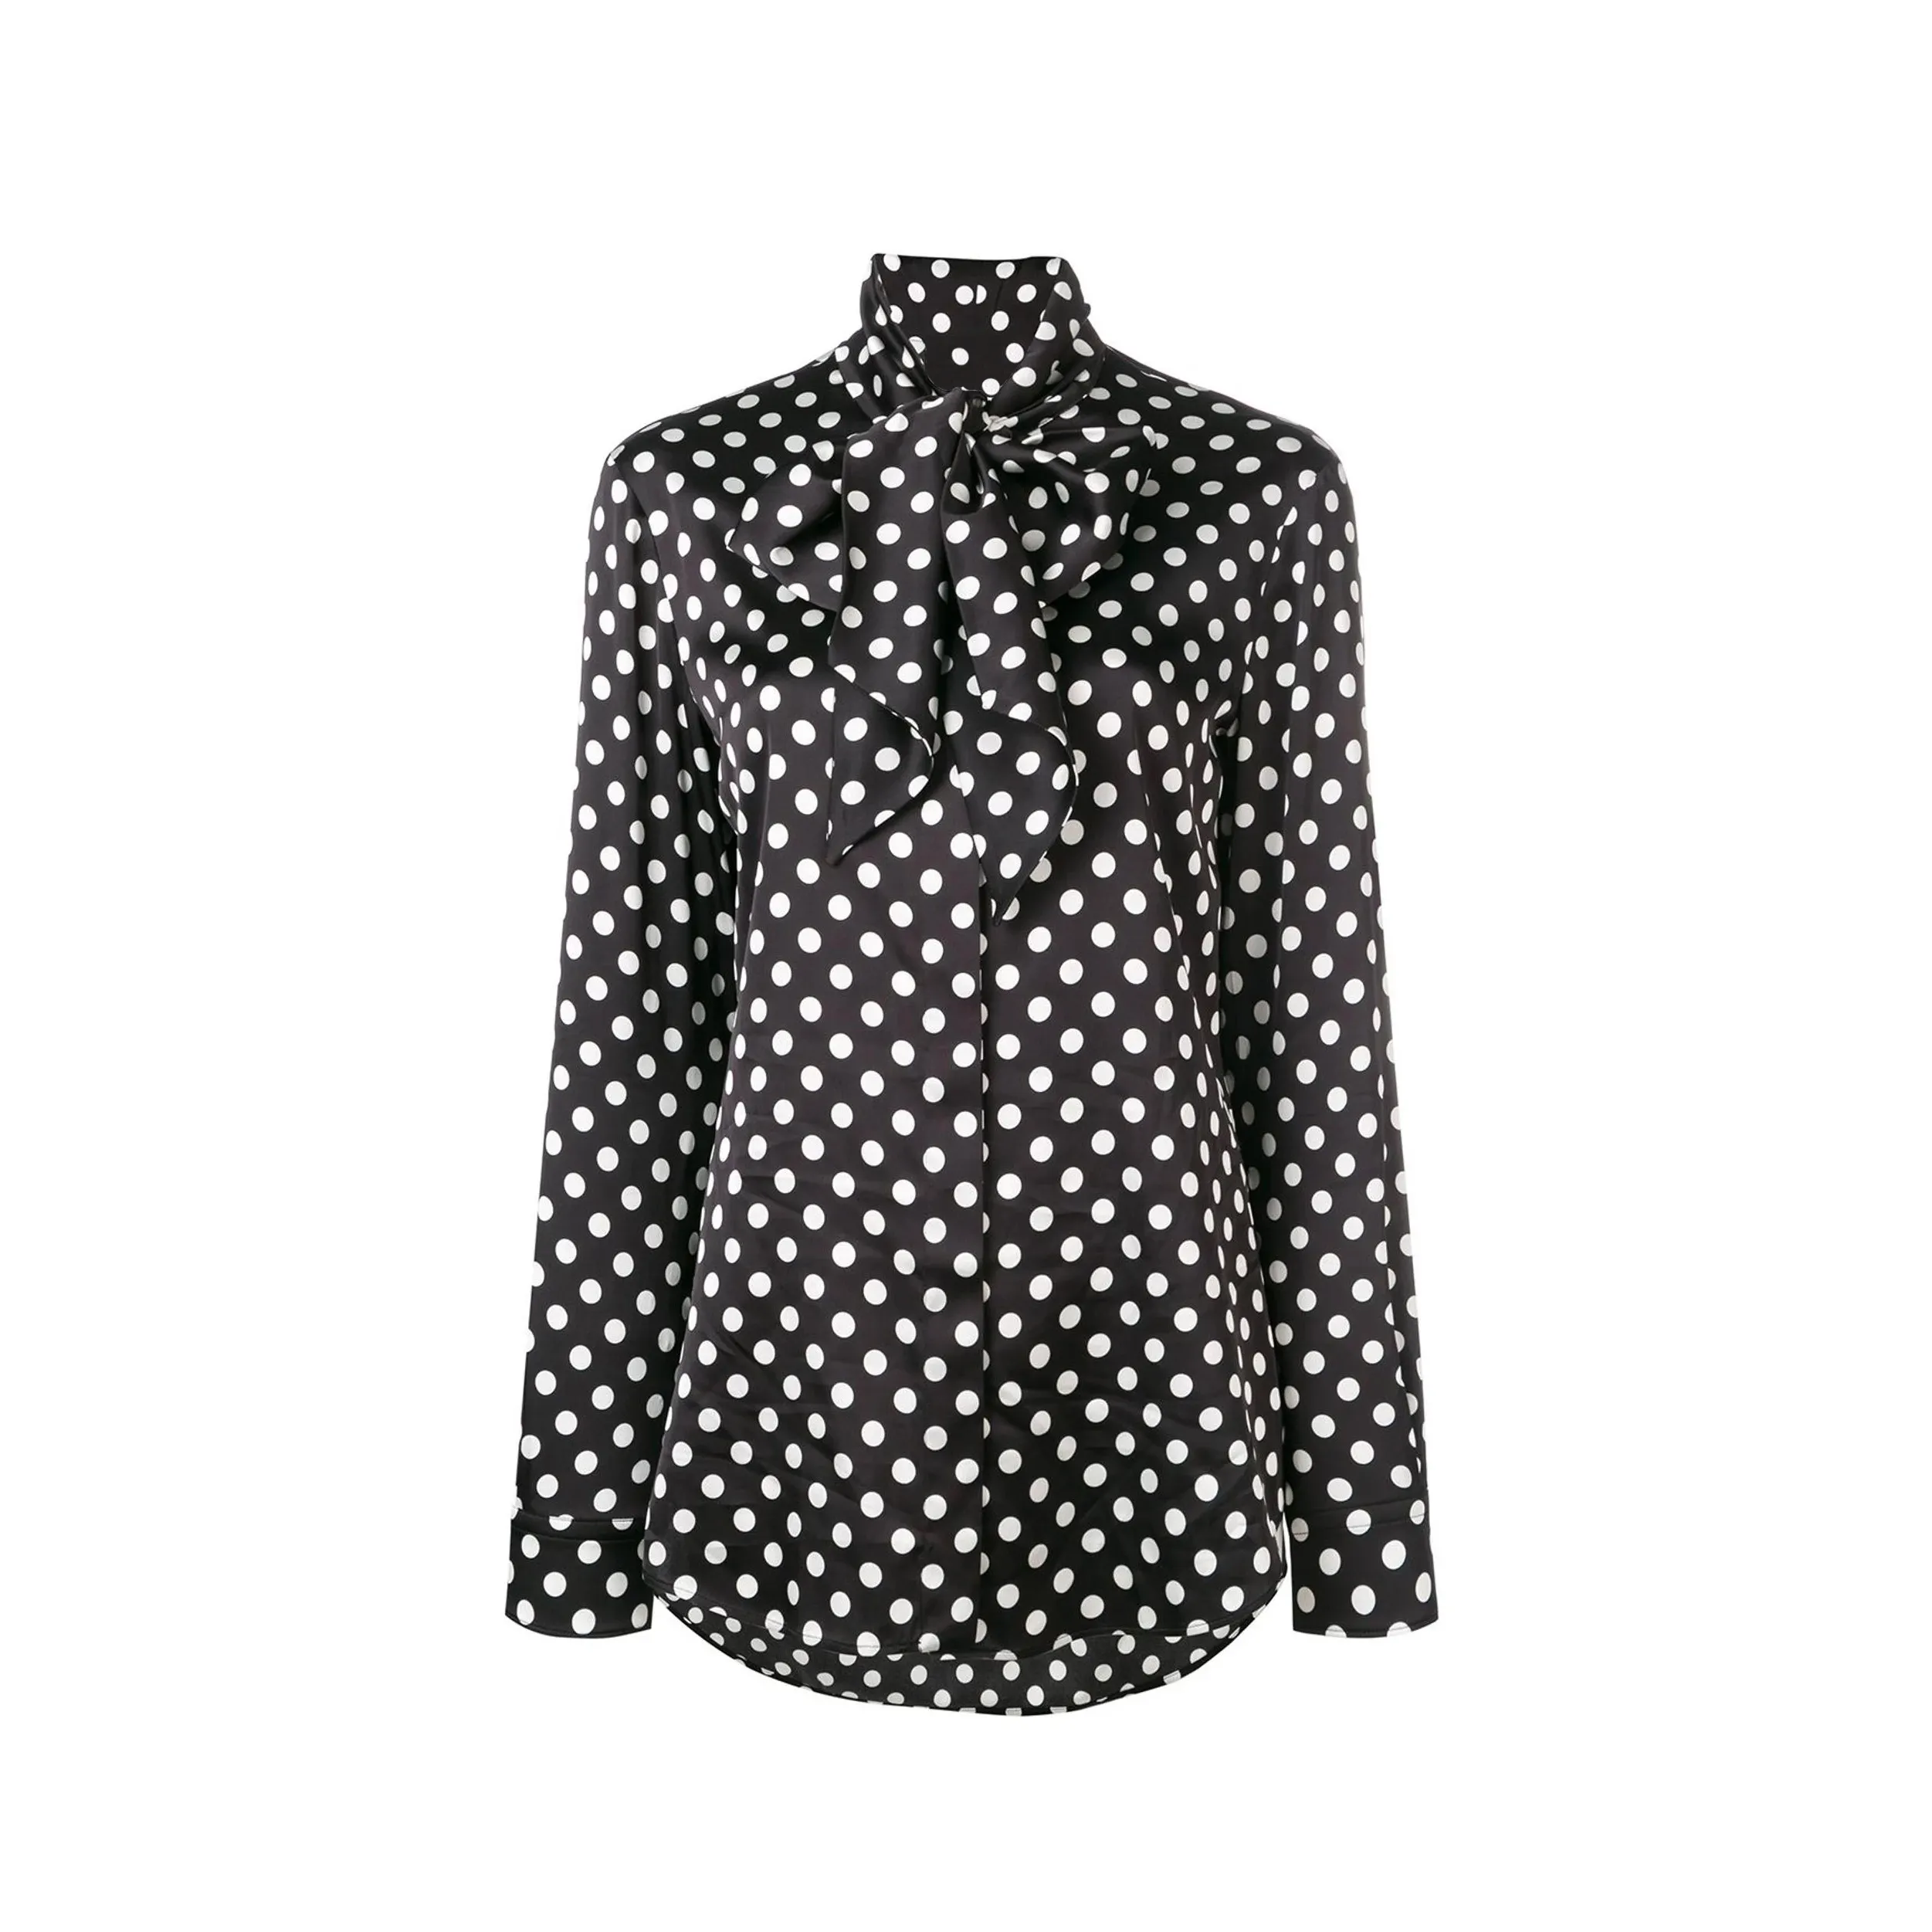 Fabricantes de ropa de moda elegante para mujer, blusas de camisa Vintage de gasa con lunares negros de manga larga personalizadas para dama